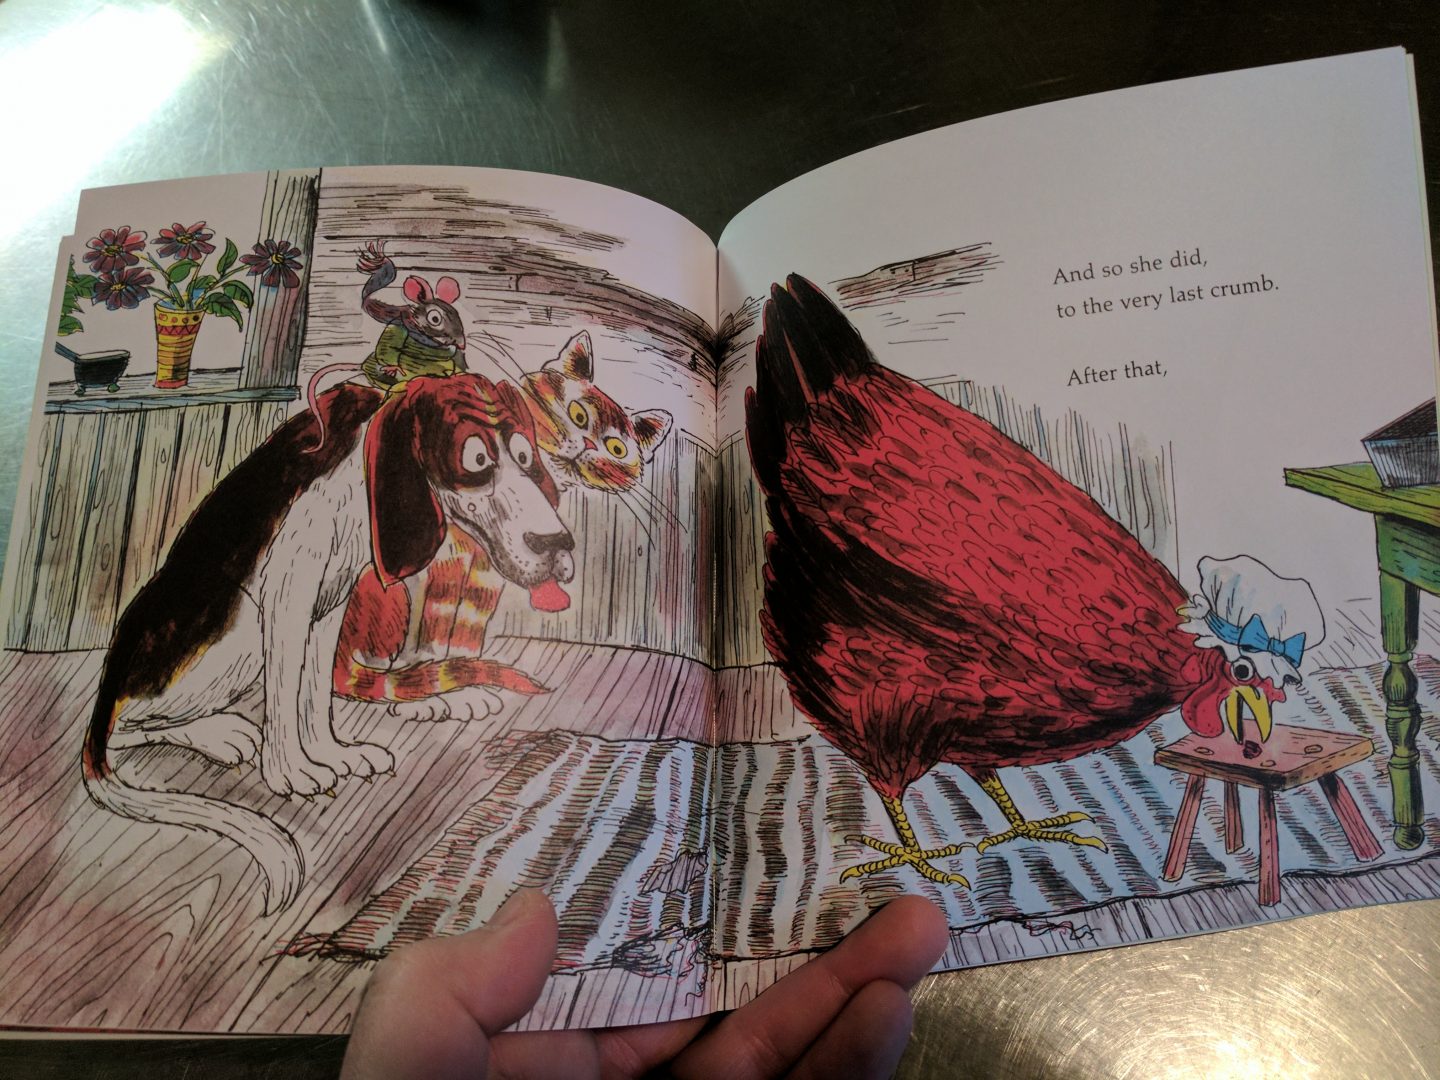 The Little Red Hen Book